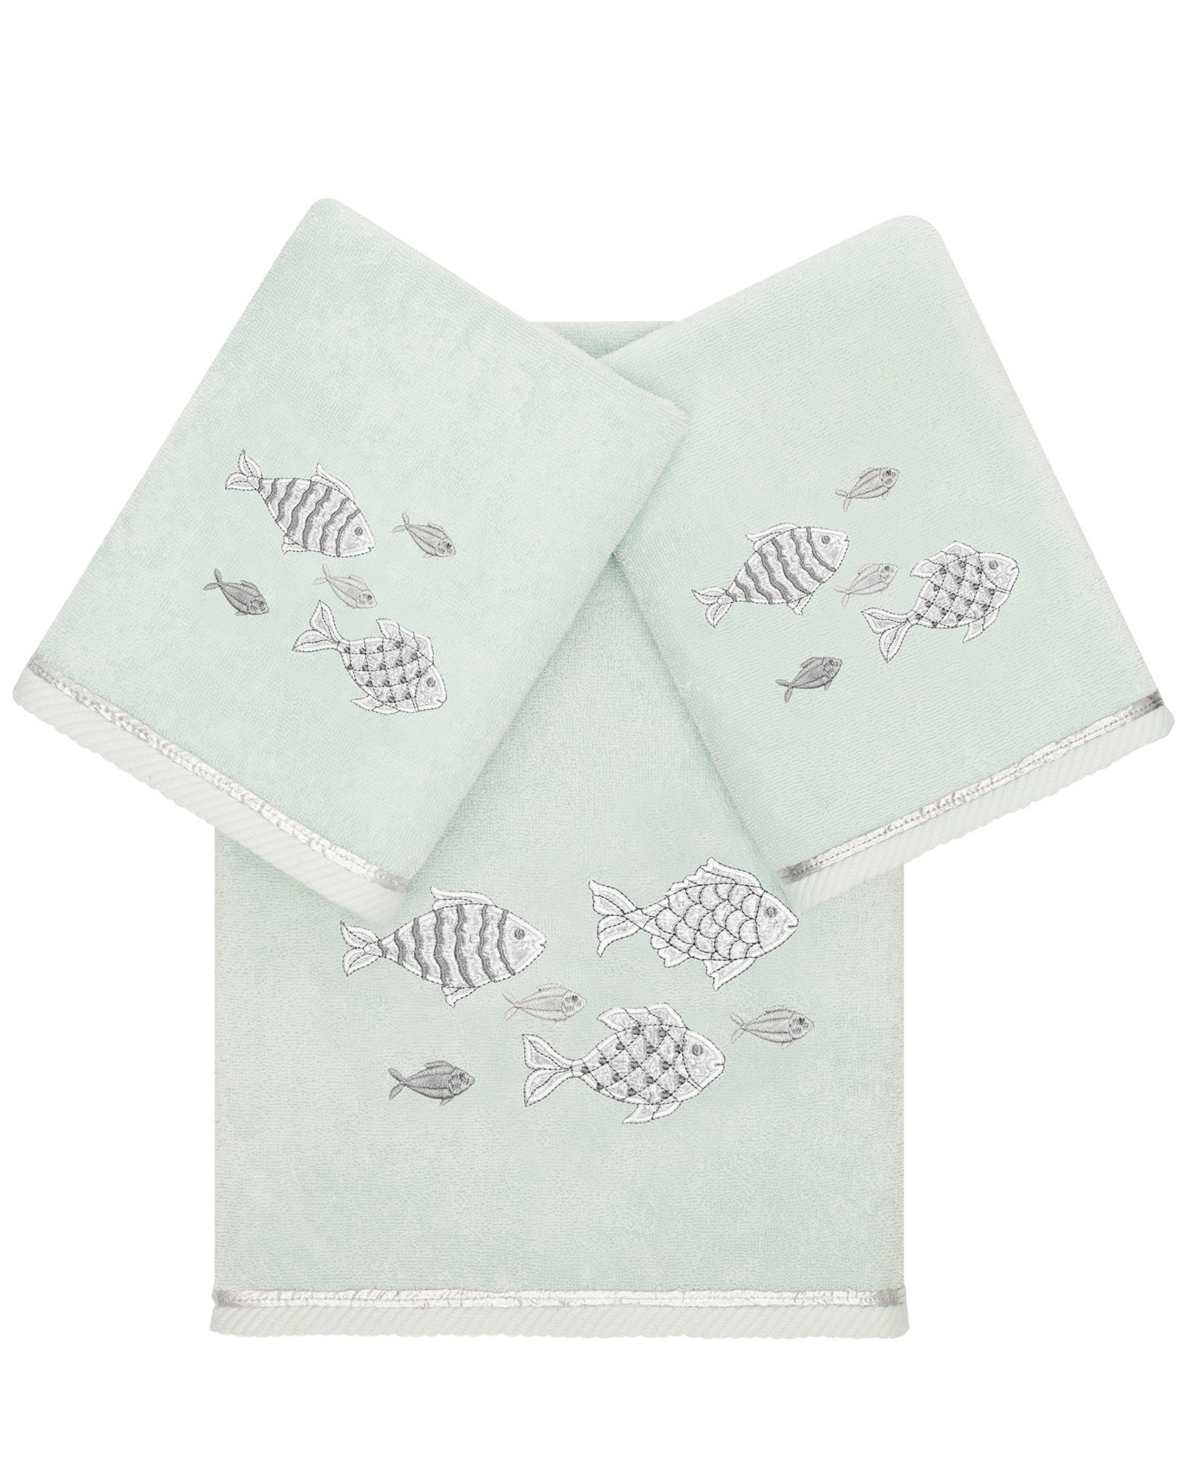 Linum Home Textiles Turkish Cotton Figi Embellished Towel Set, 3 Piece Bedding In Aqua